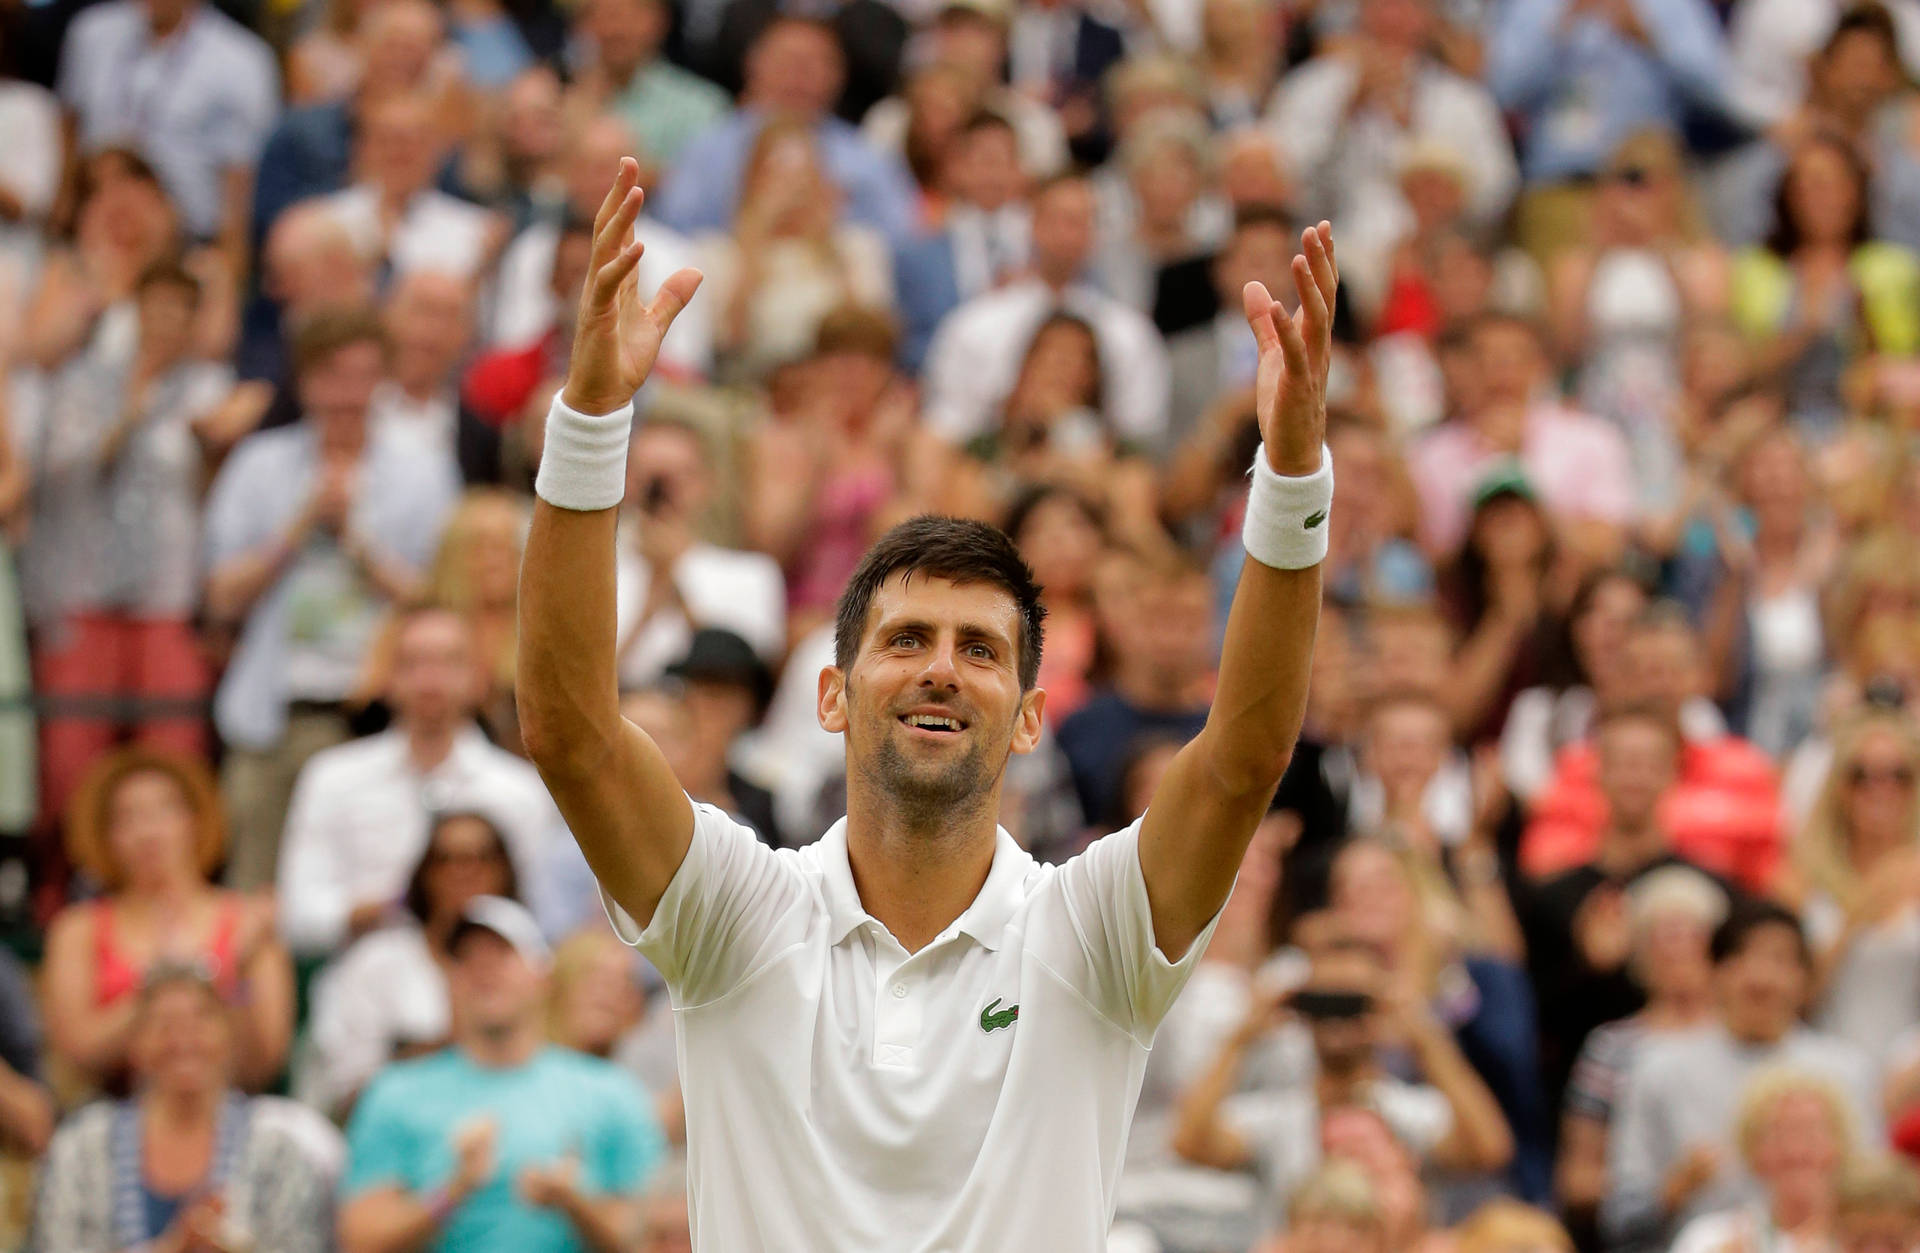 Novakdjokovic Wimbledon 2021: Novak Djokovics Wimbledon 2021 Wallpaper